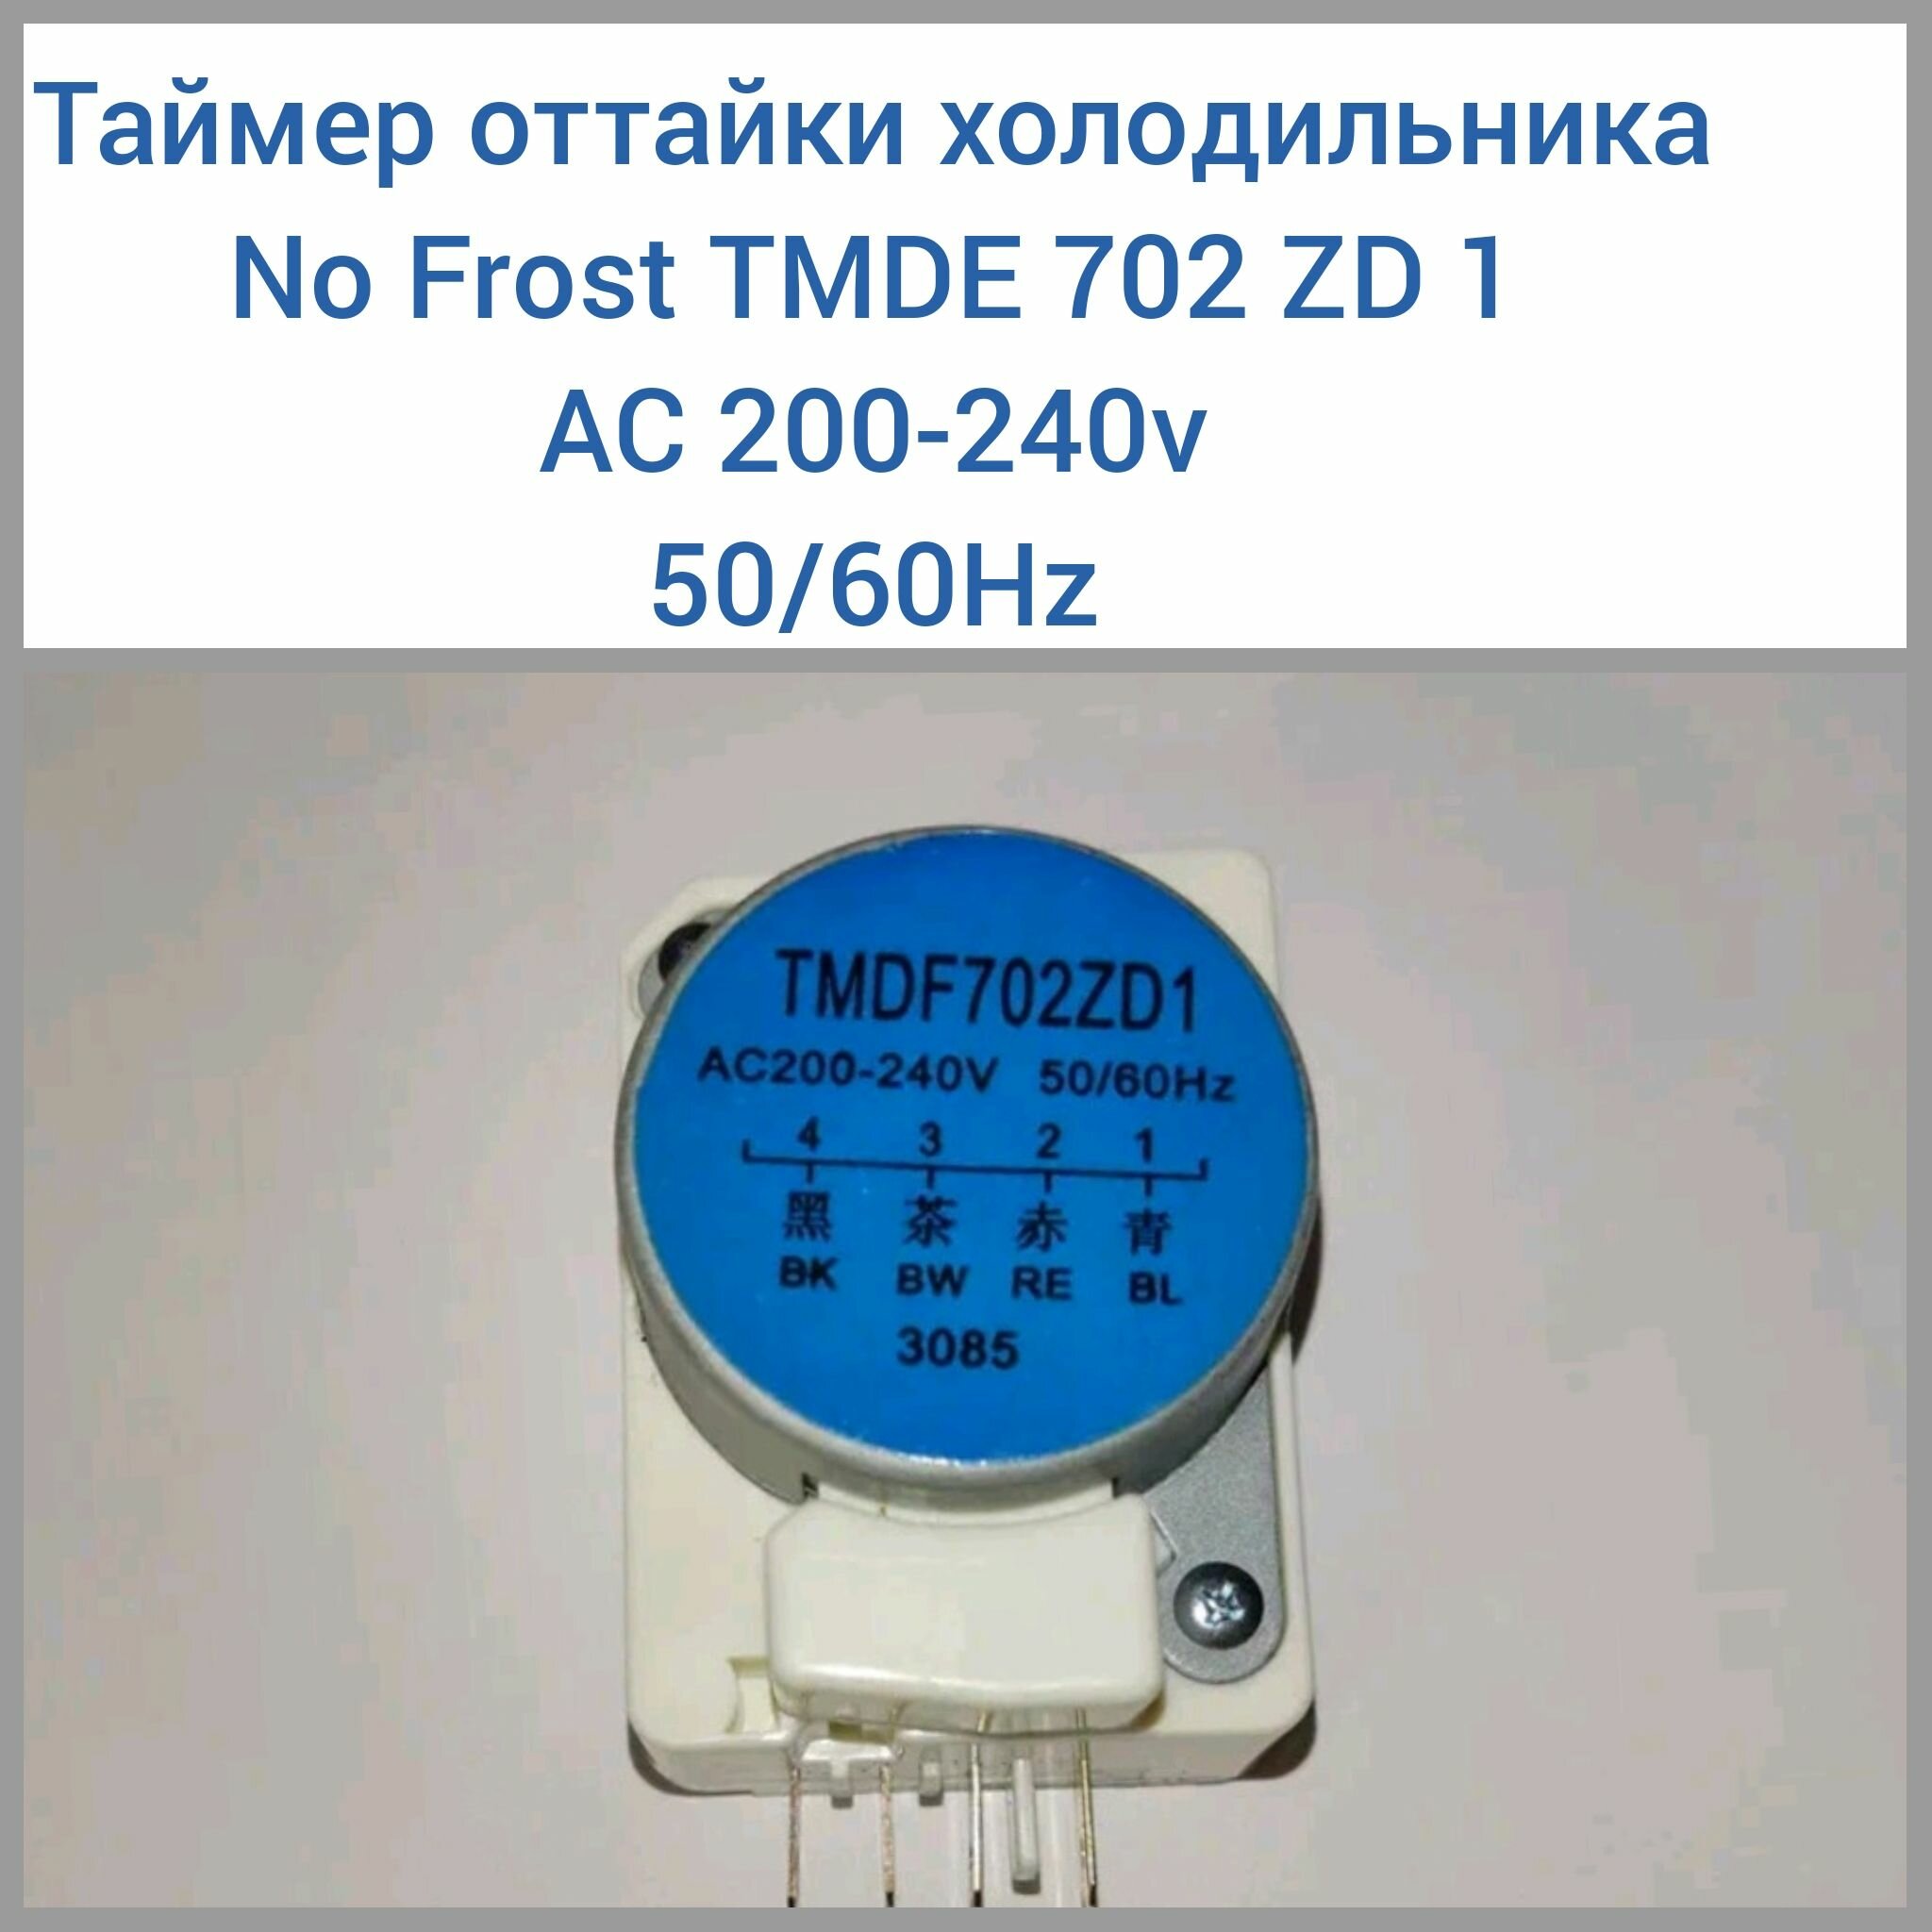 Таймер оттайки холодильника No Frost TMDE 702 ZD 1 AC200-240V 50/60Hz - фотография № 1